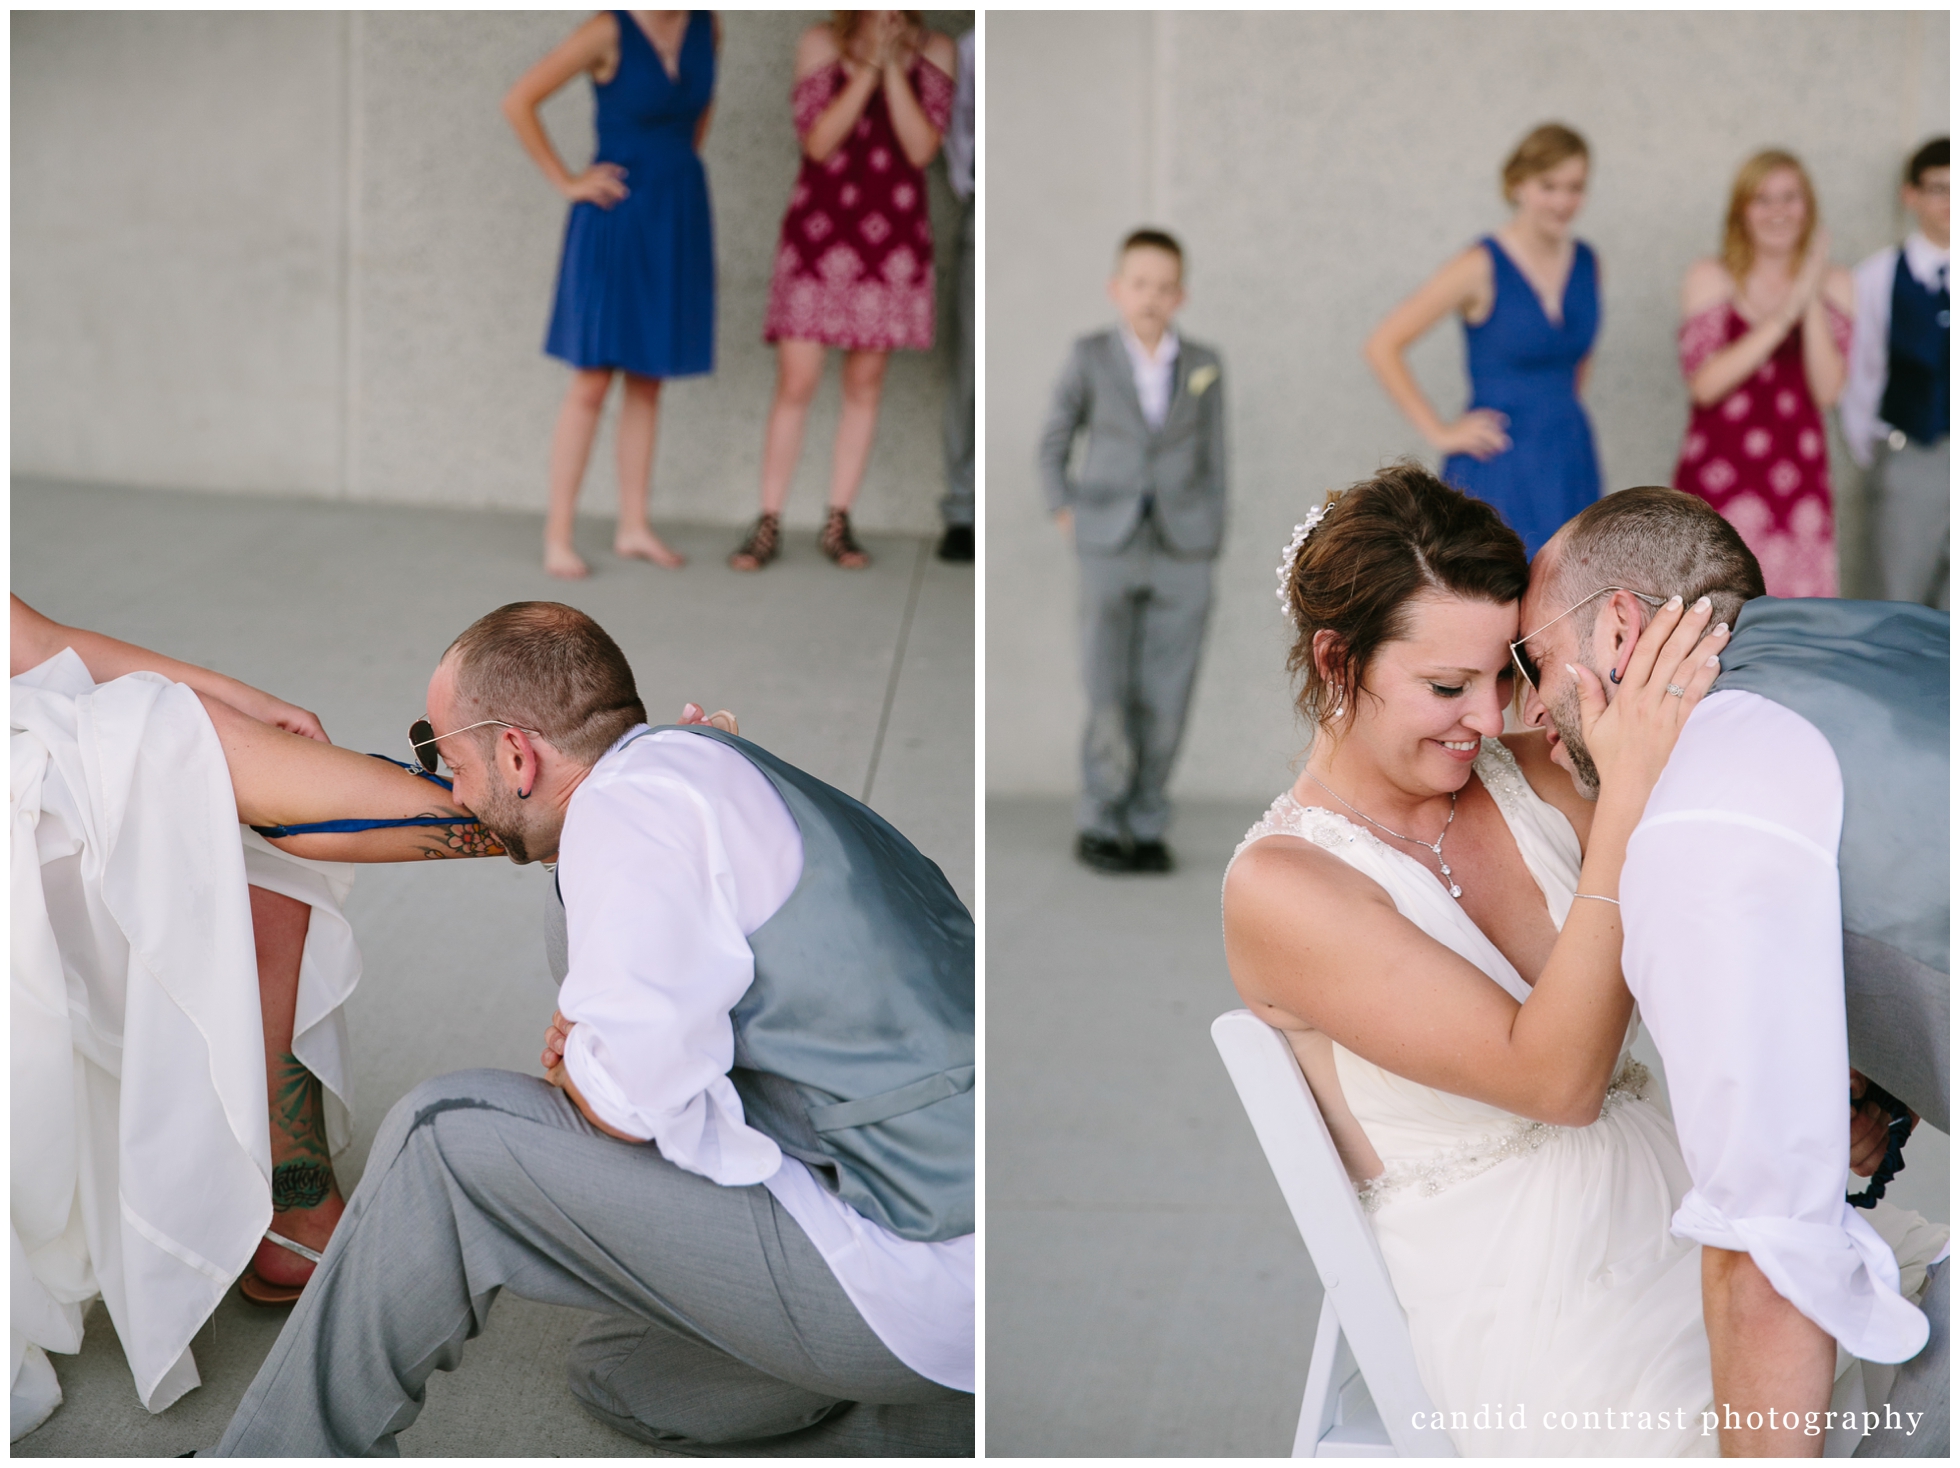 garter toss at a bellevue iowa outdoor wedding at the shore event center, iowa wedding photographer candid contrast photography